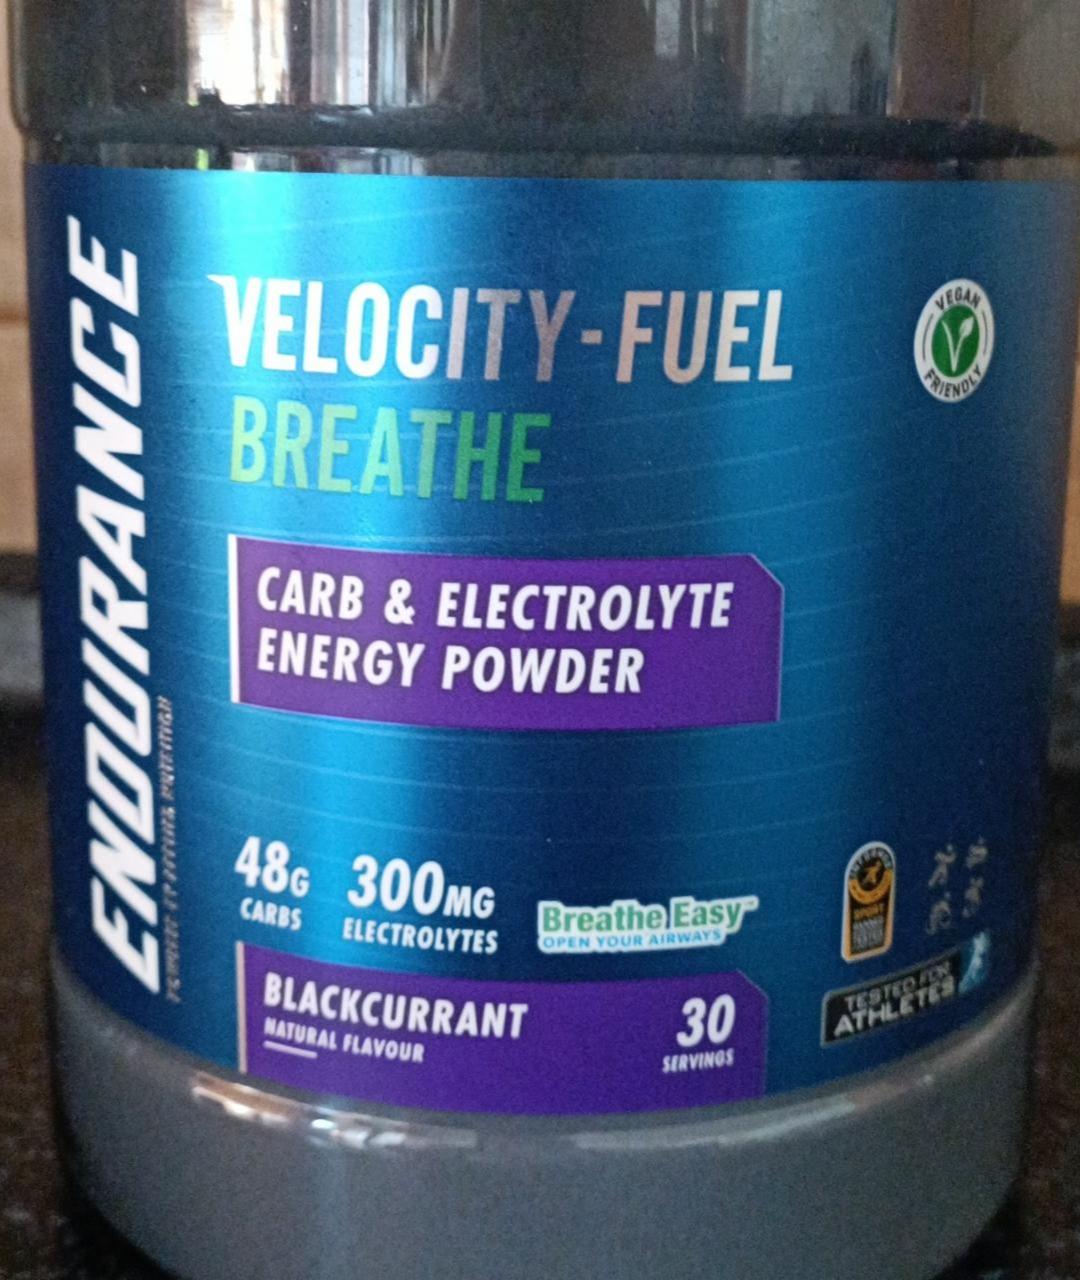 Fotografie - Endurance Velocity-Fuel Carb & Electrolyte Energy Powder Blackcurrant Applied nutrition